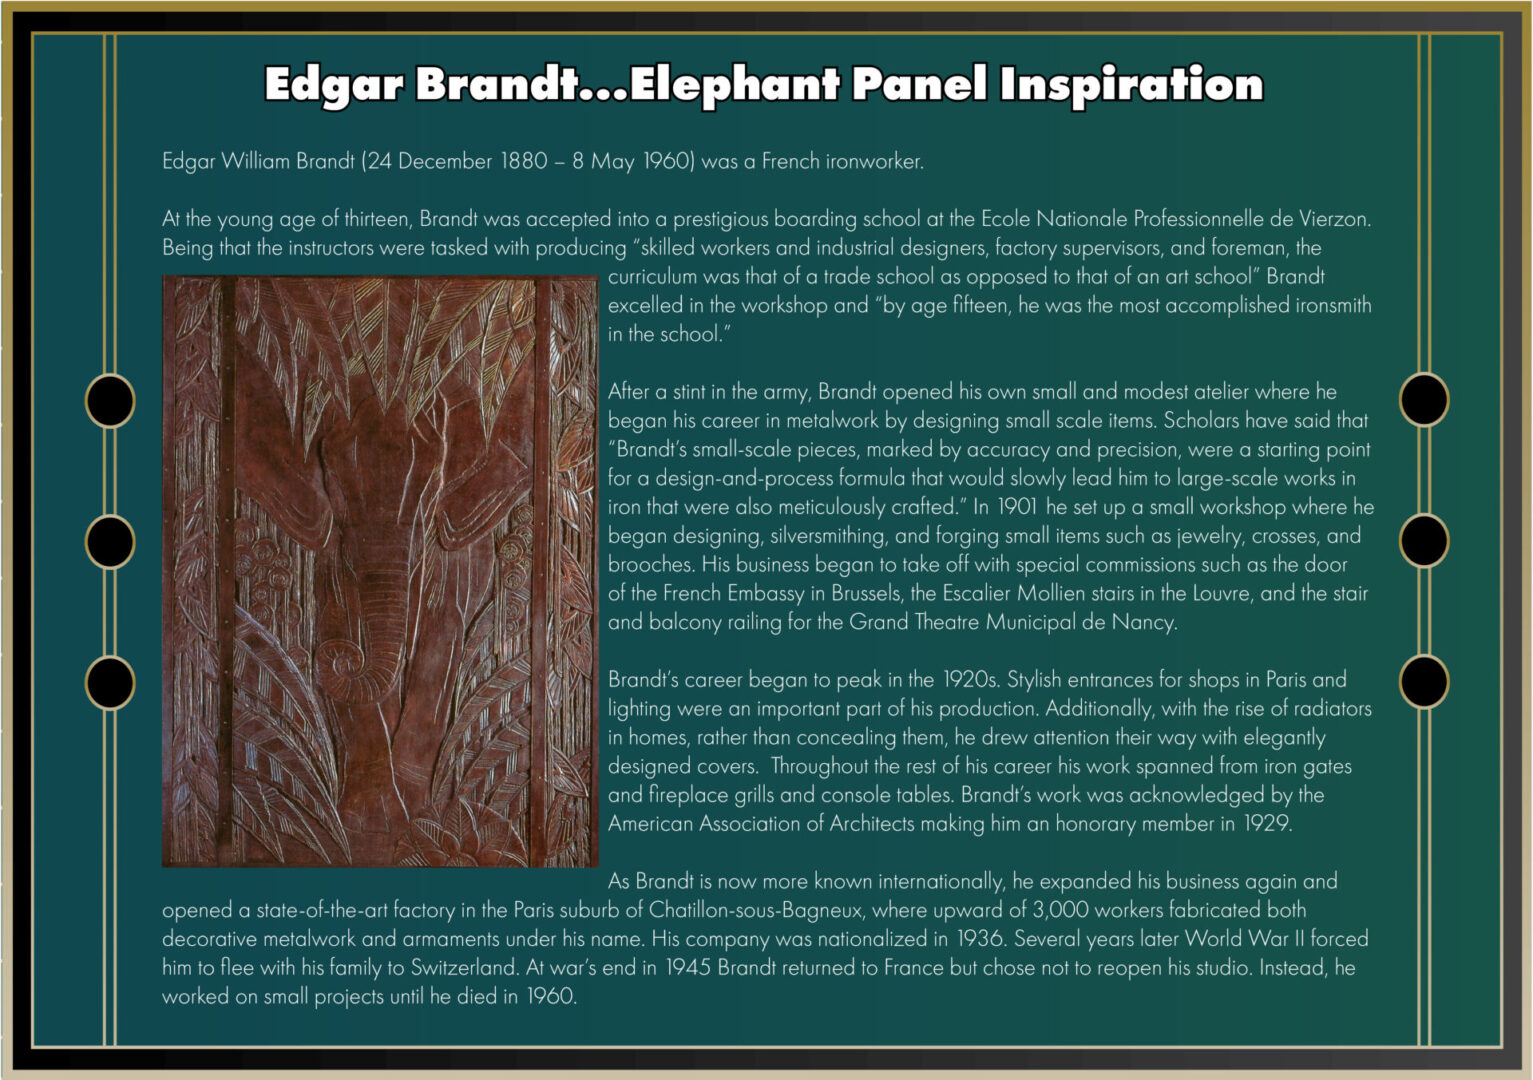 Elephant Panel Inspiration by Edgar Brandt